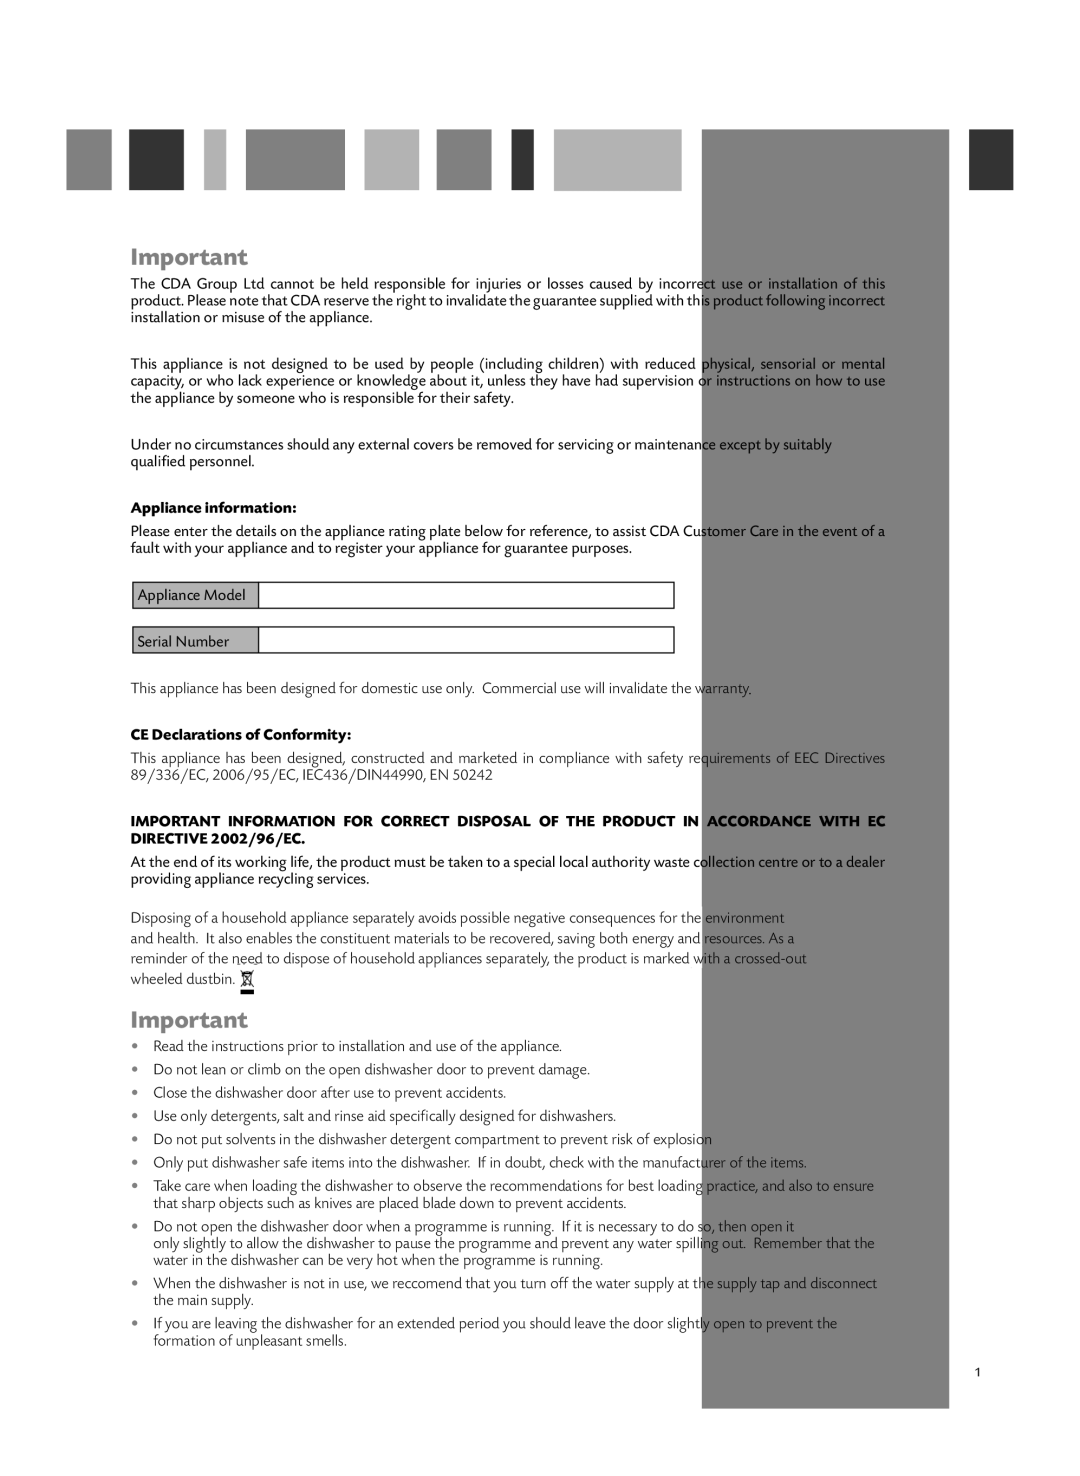 CDA WC430 manual Appliance information, CE Declarations of Conformity 